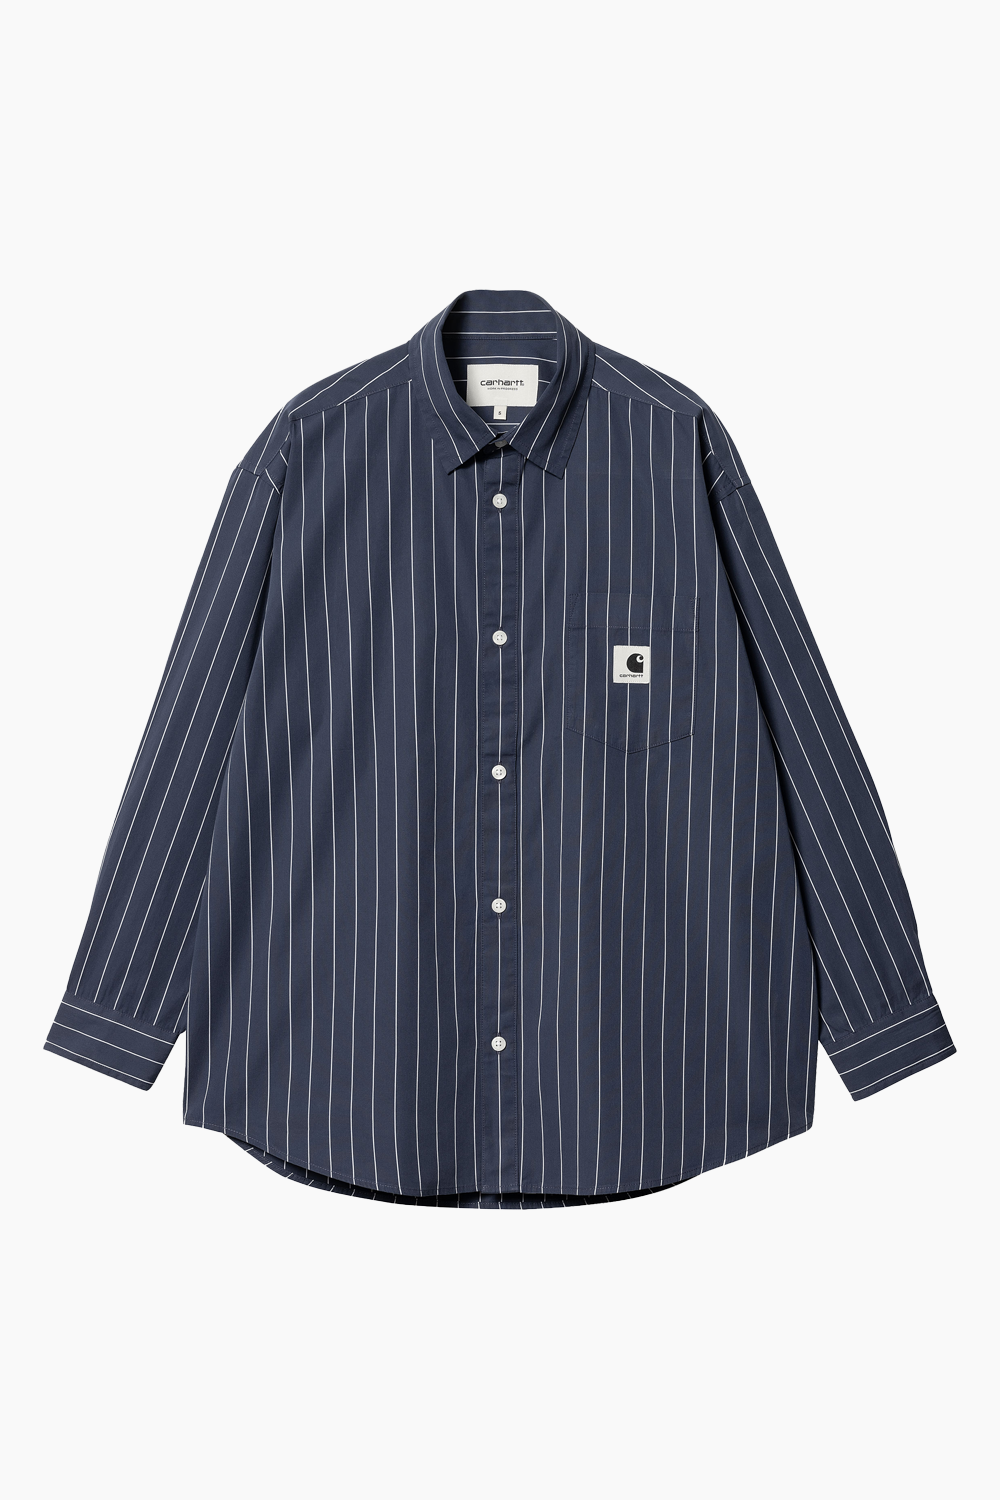 W' L/S Orlean Shirt - Orlean Stripe, Blue/White - Carhartt WIP - Stribet S